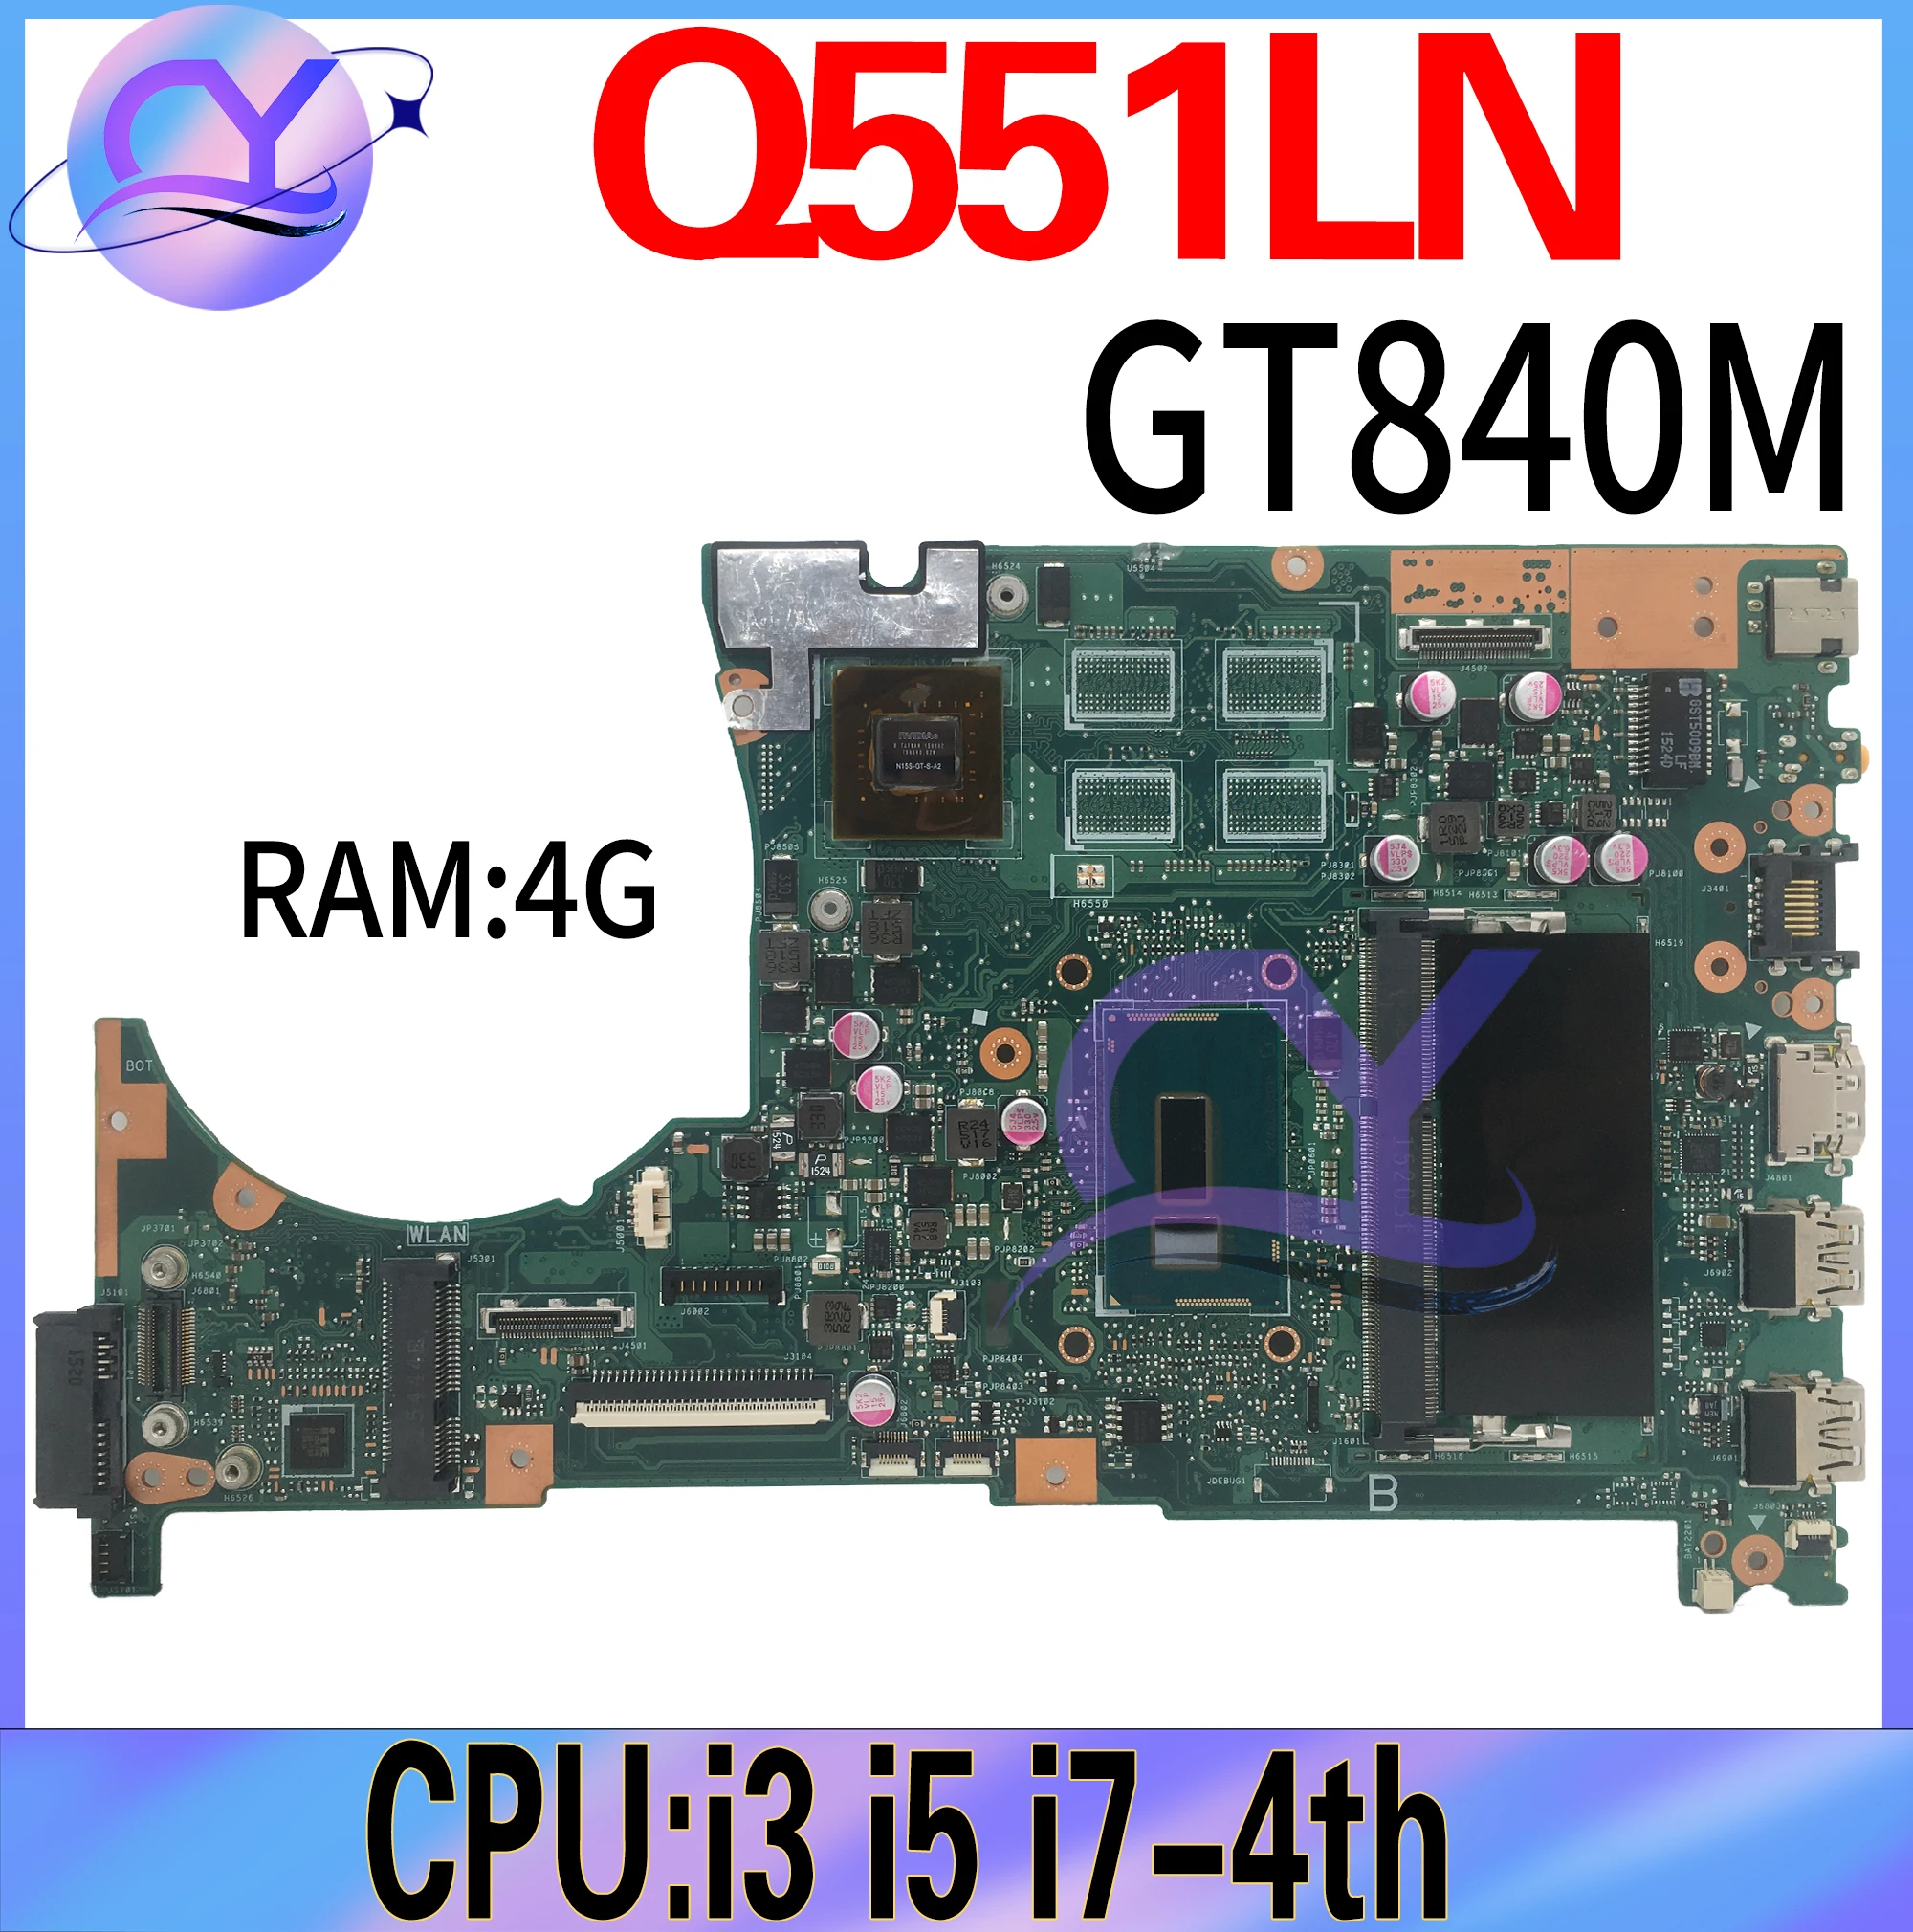 

Q551LN Mainboard For ASUS Vivobook Q551L Q551 Q551LB Laptop Motherboard I3 I5 I7-4th GT840M RAM/4GB 100% Working Well